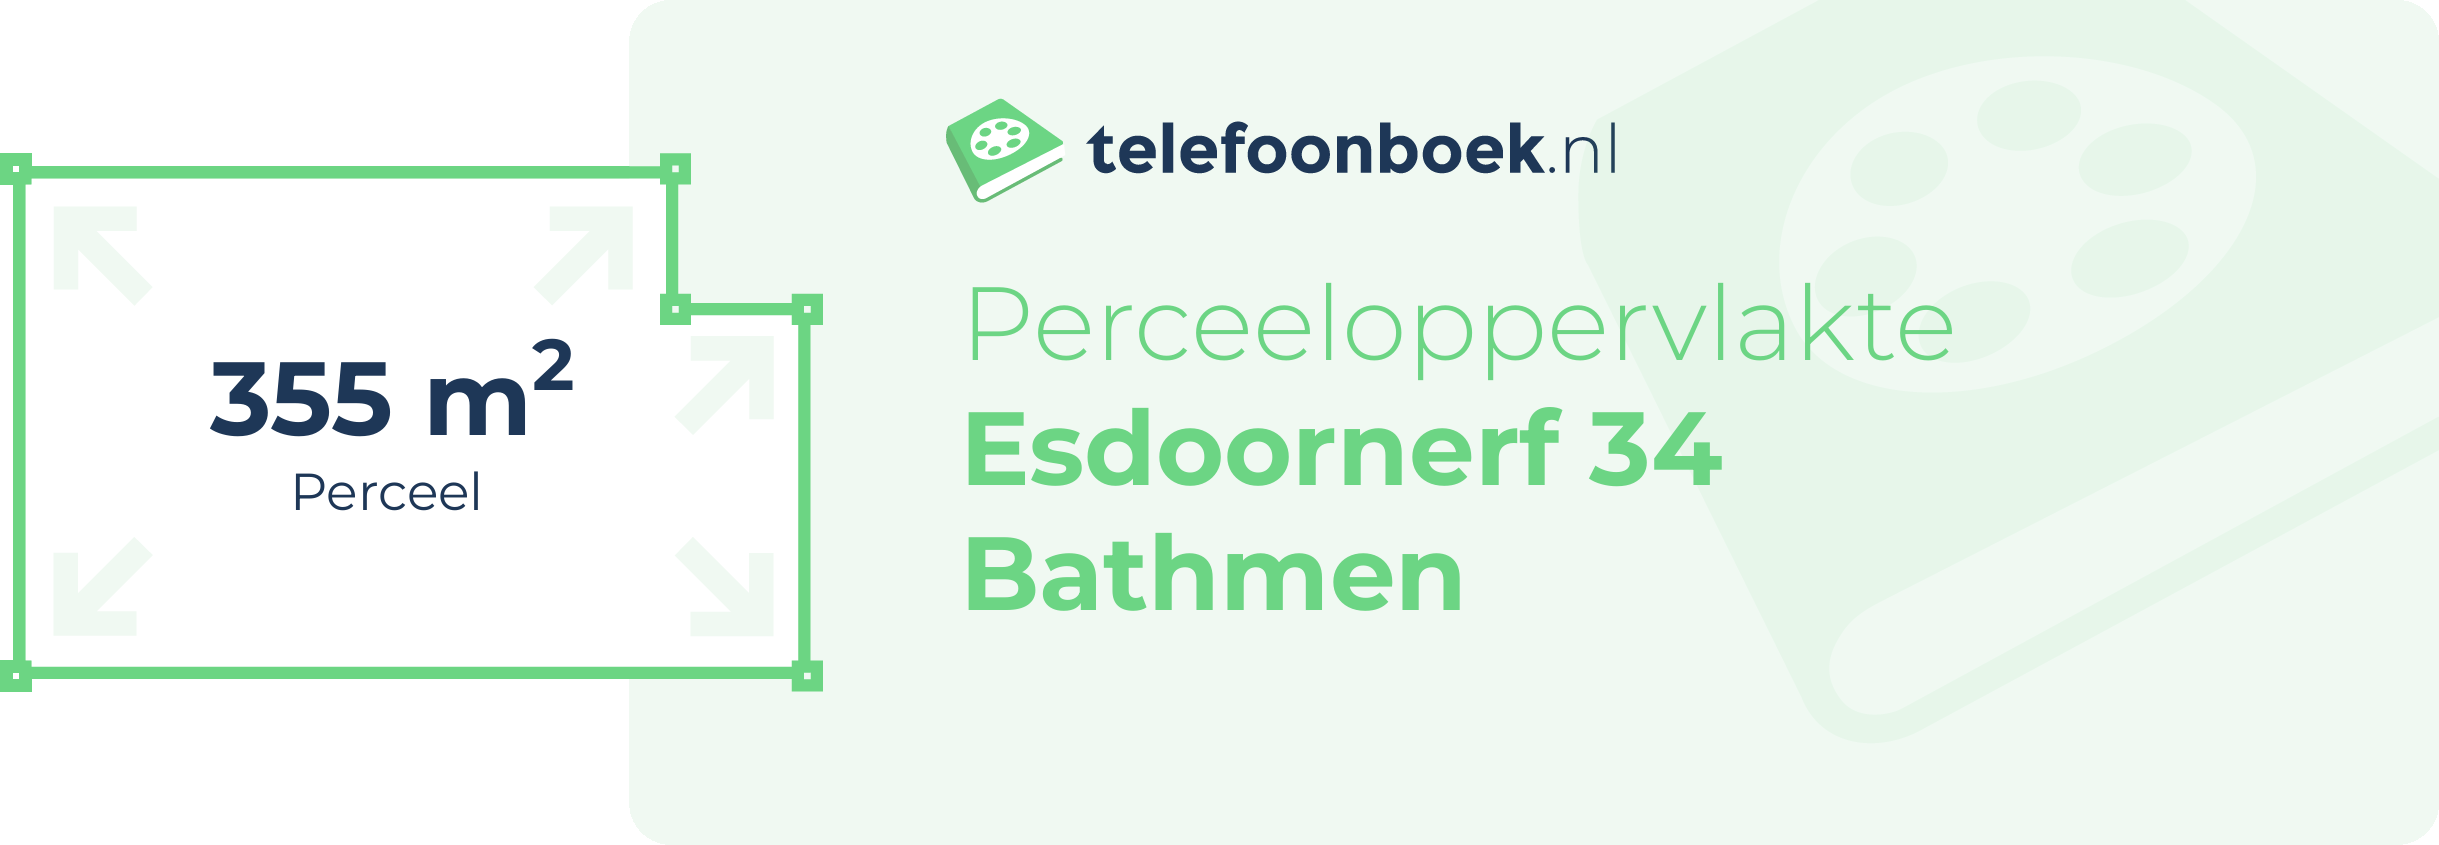 Perceeloppervlakte Esdoornerf 34 Bathmen